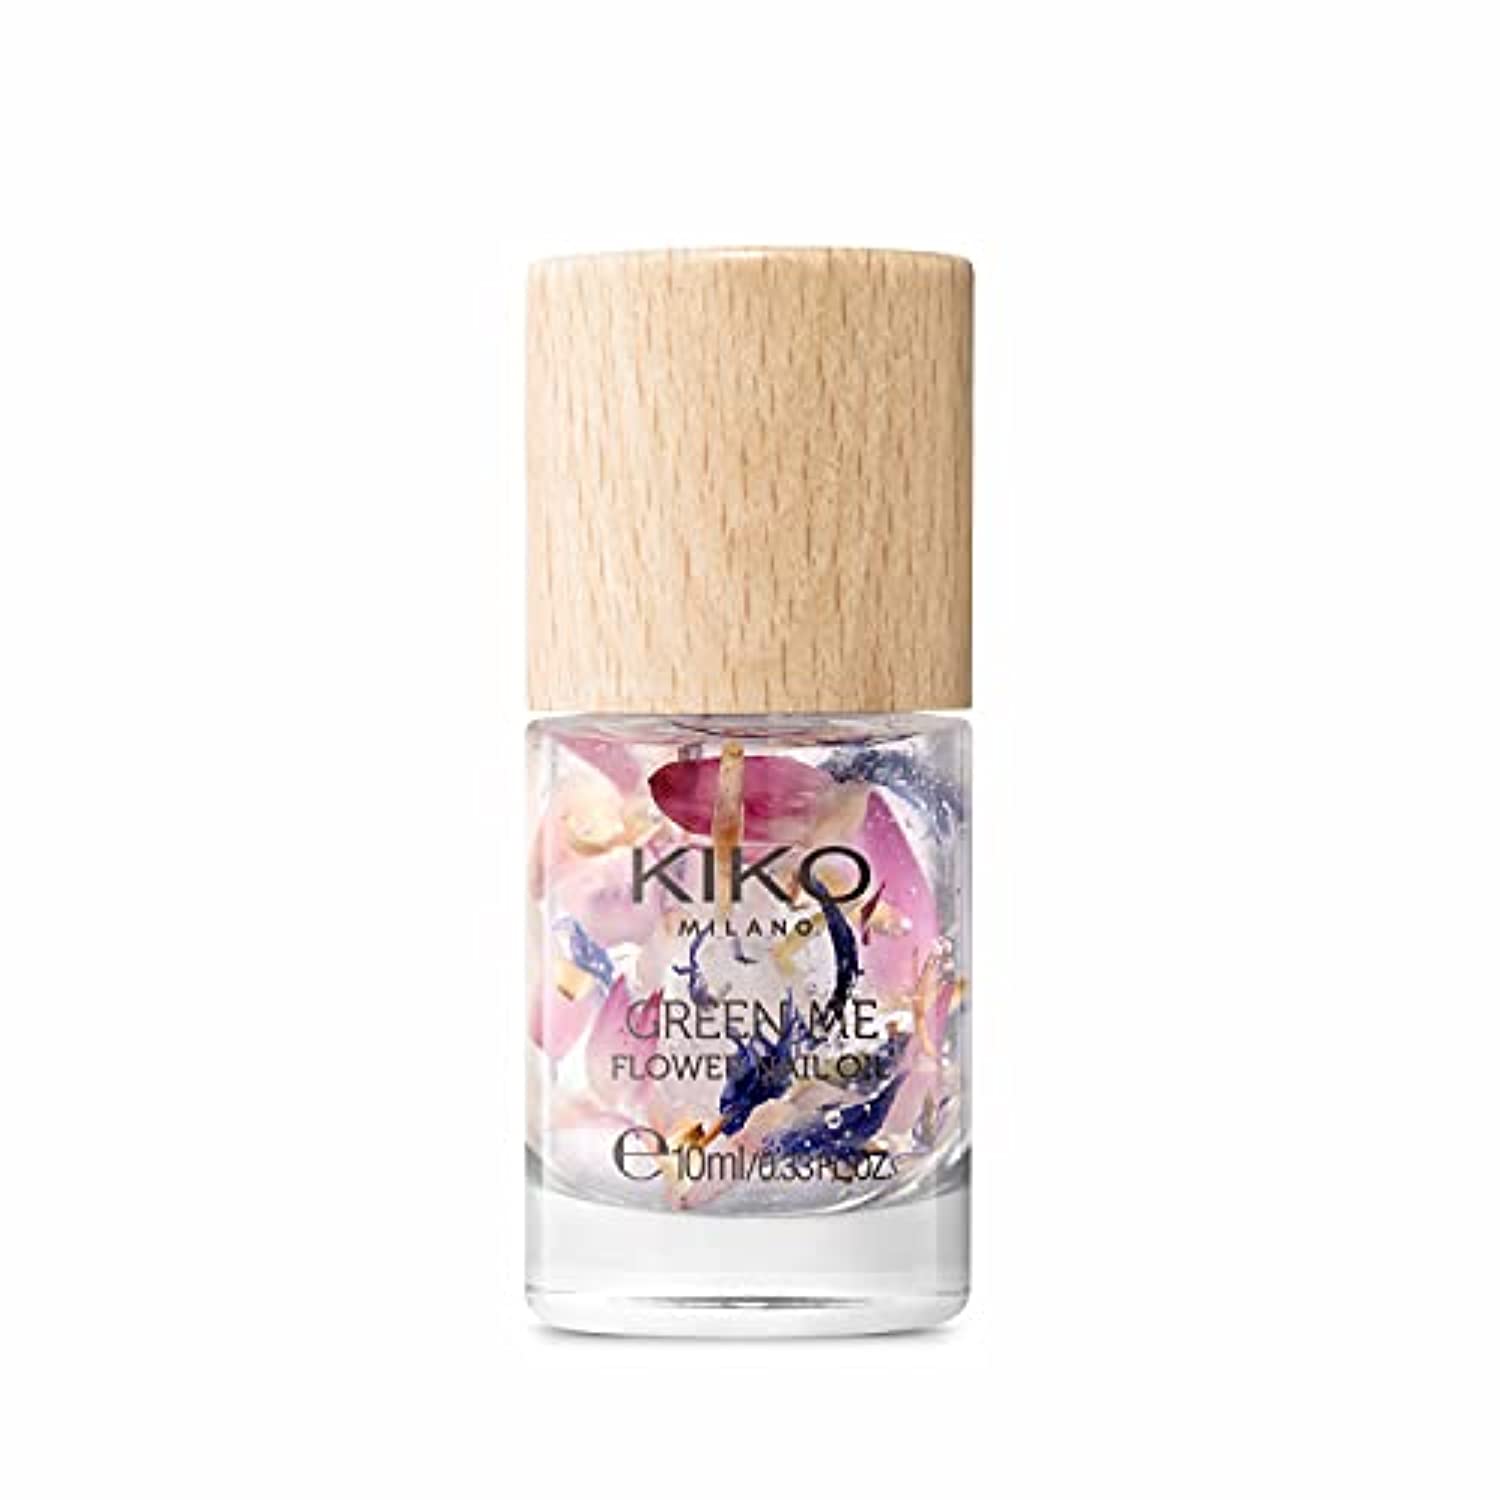 KIKO MILANO - New Green Me Flower Nail Oil - Edition 2020 <p>Nourishing oil for cuticles</p>